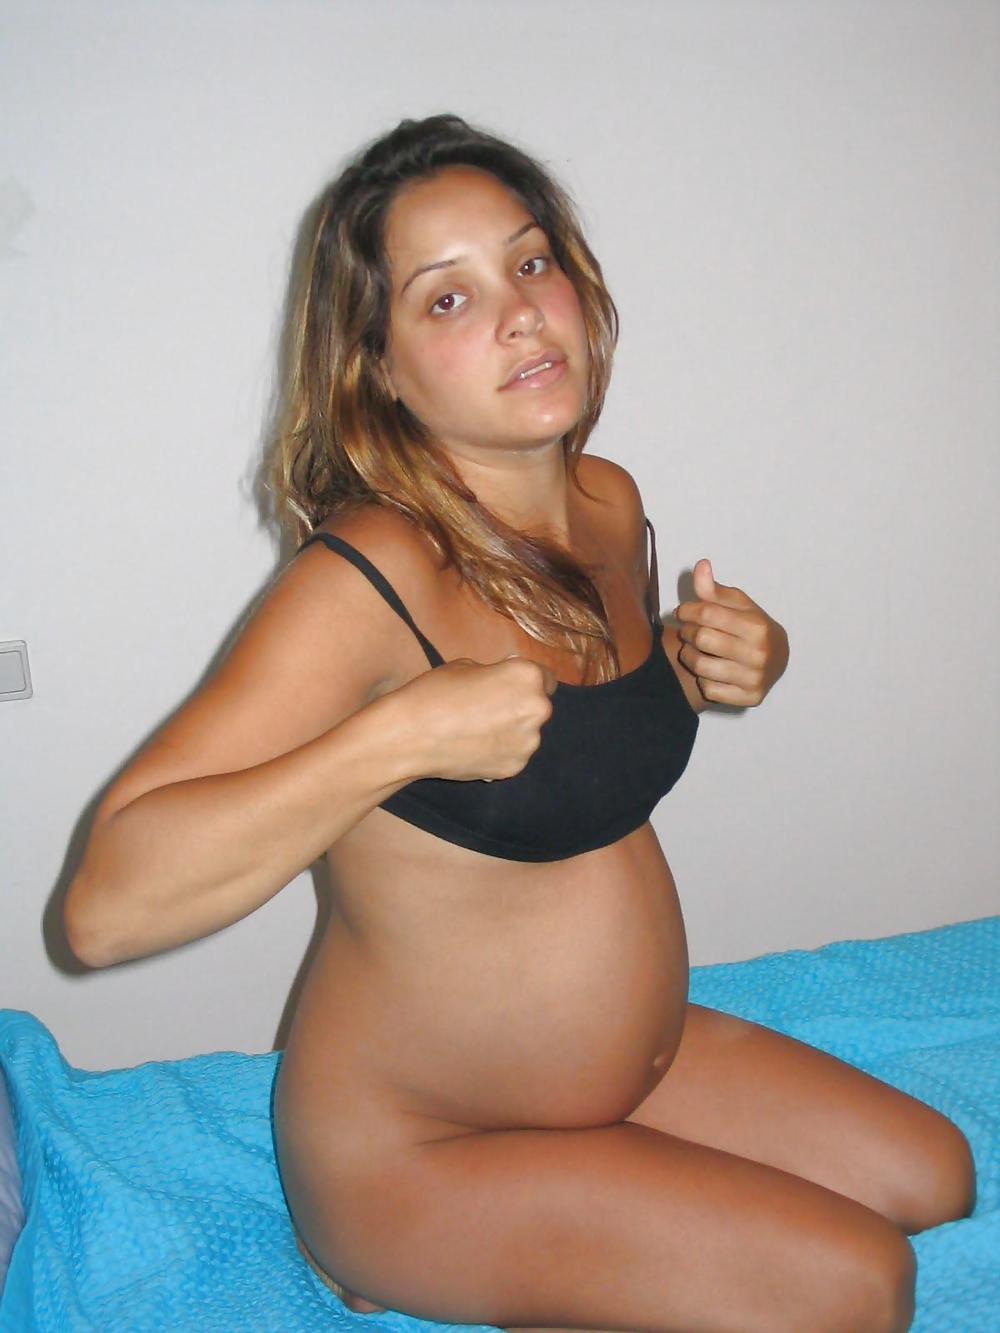 Pussy shakira pregnant pics